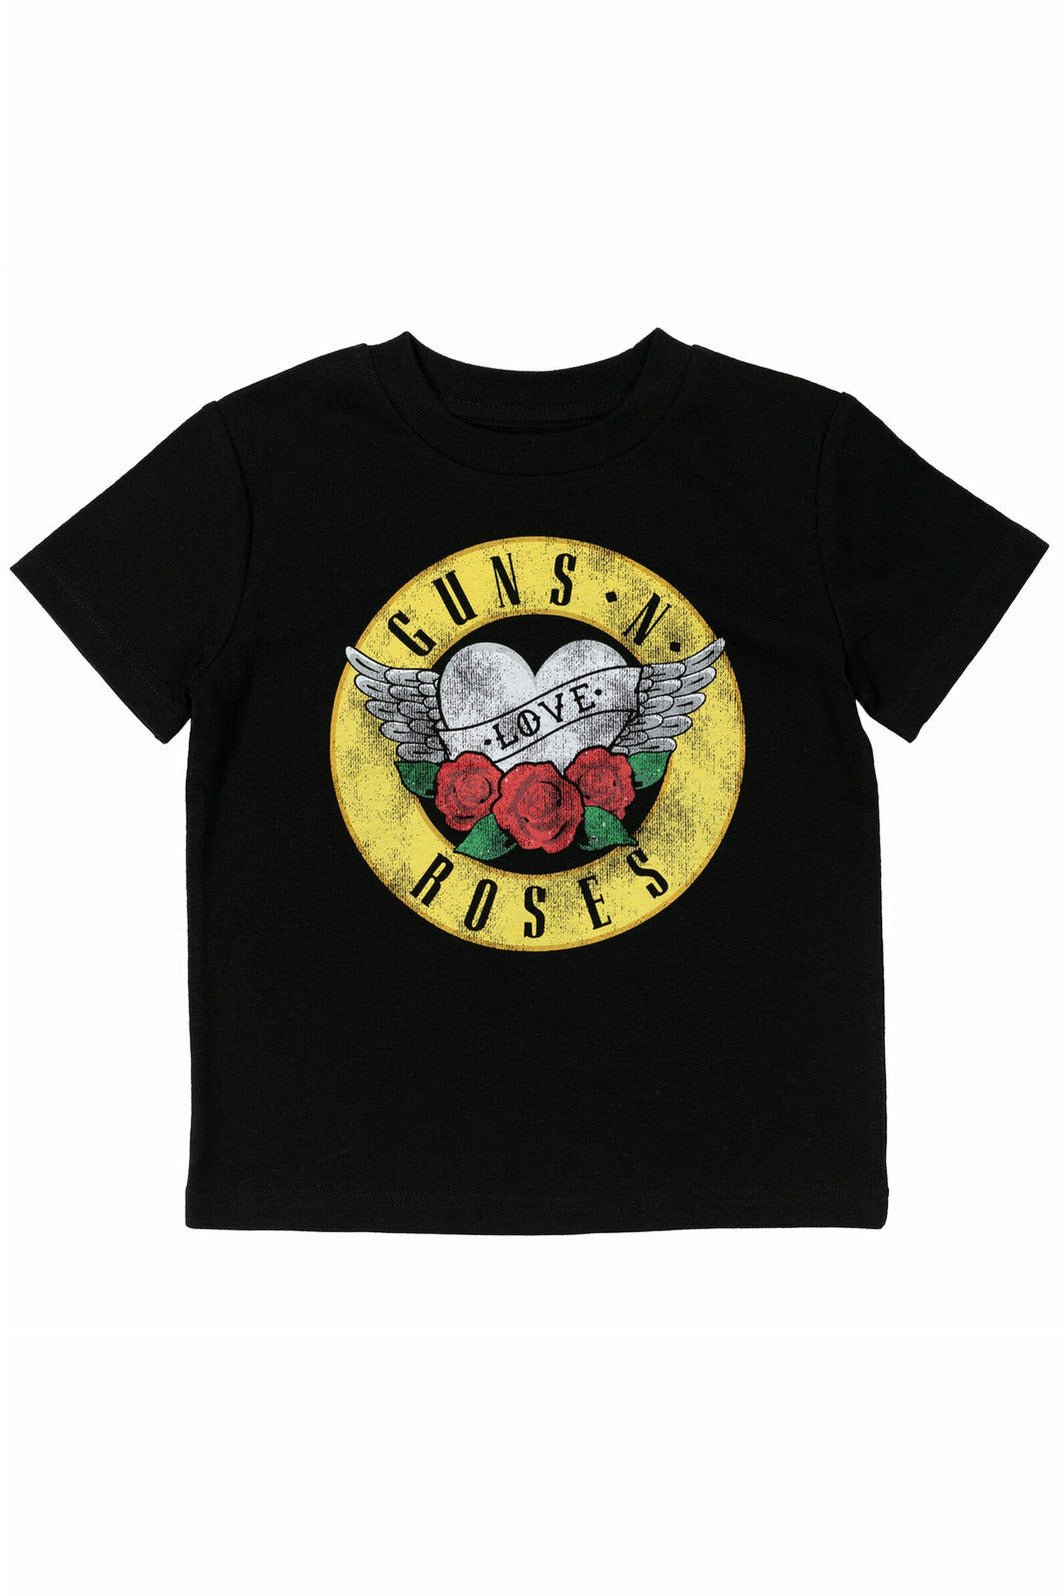 Guns N' Roses Guns N Roses 3 Pack Raglan Pullover Graphic T-Shirts - imagikids